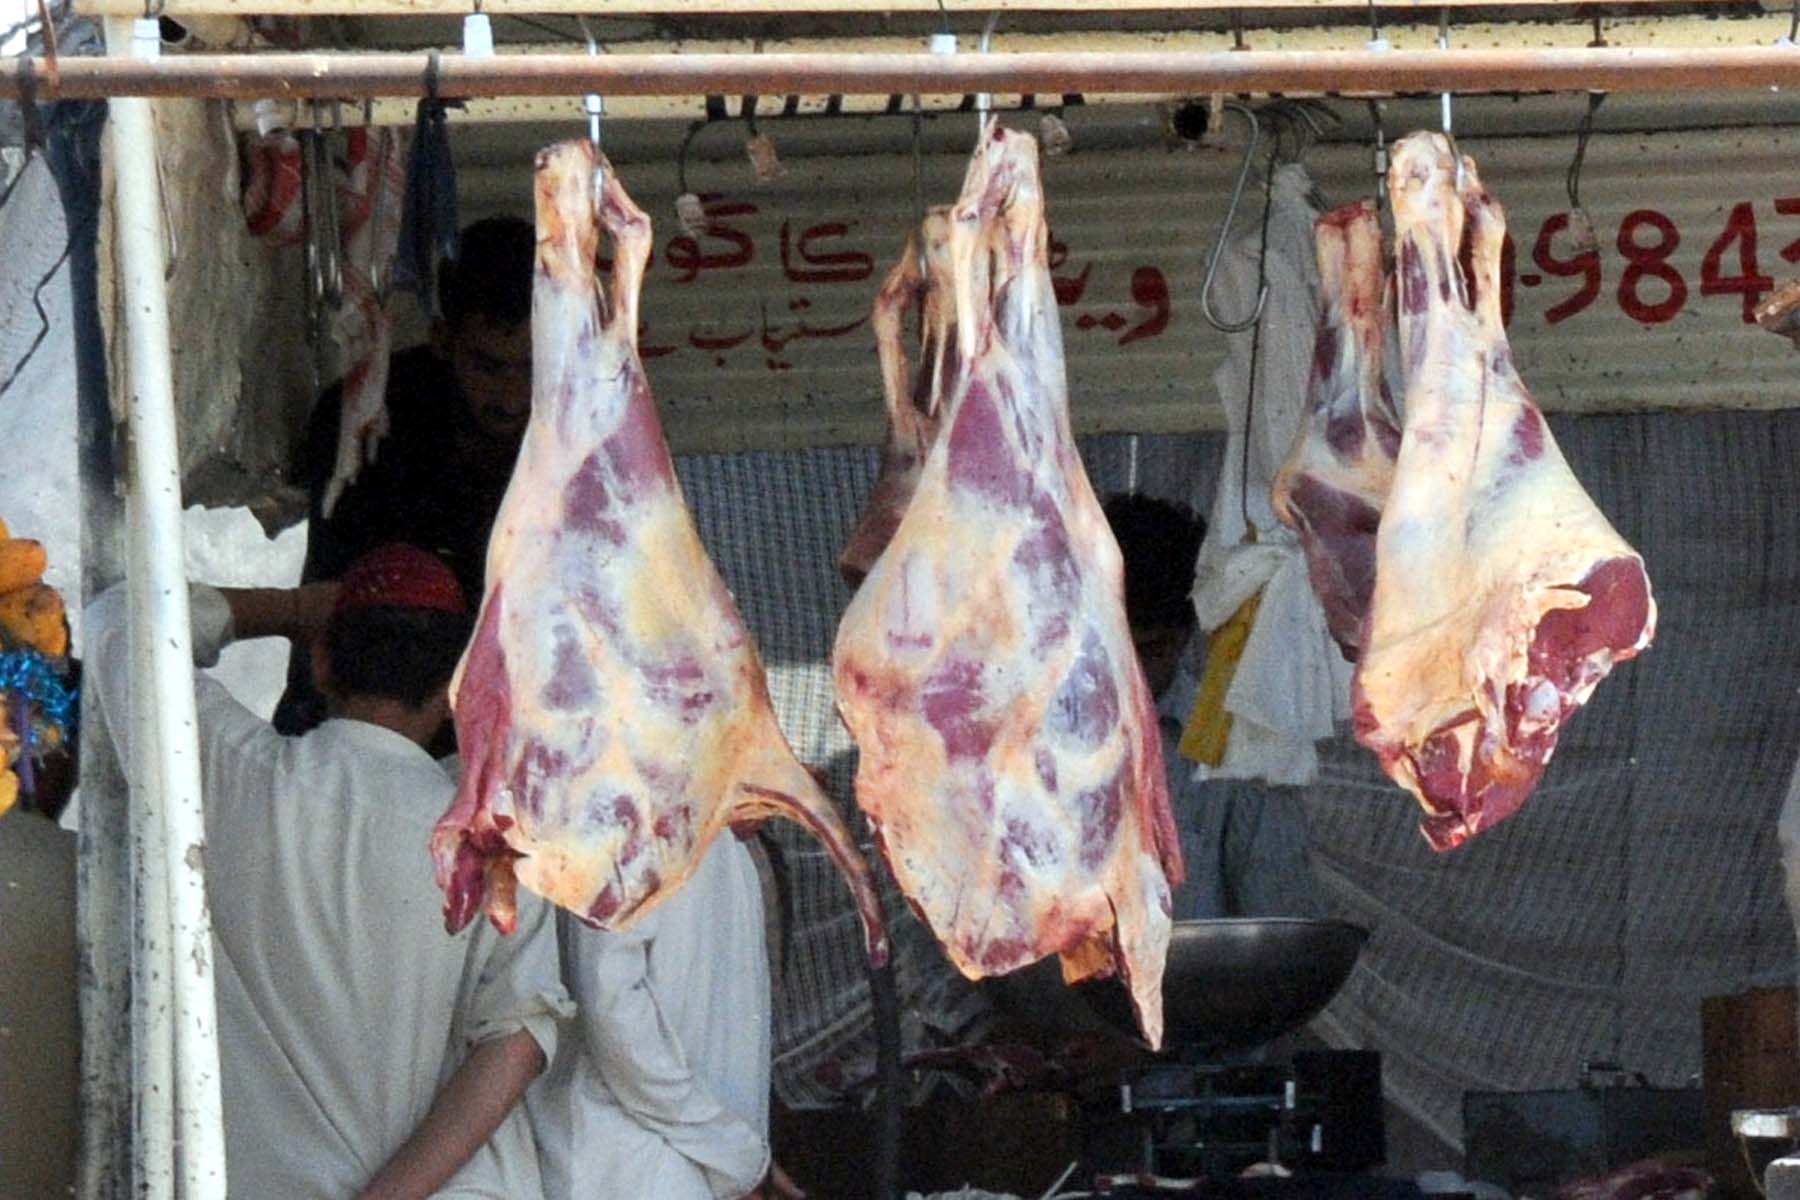 pfa shuts shop storing unhygienic meat